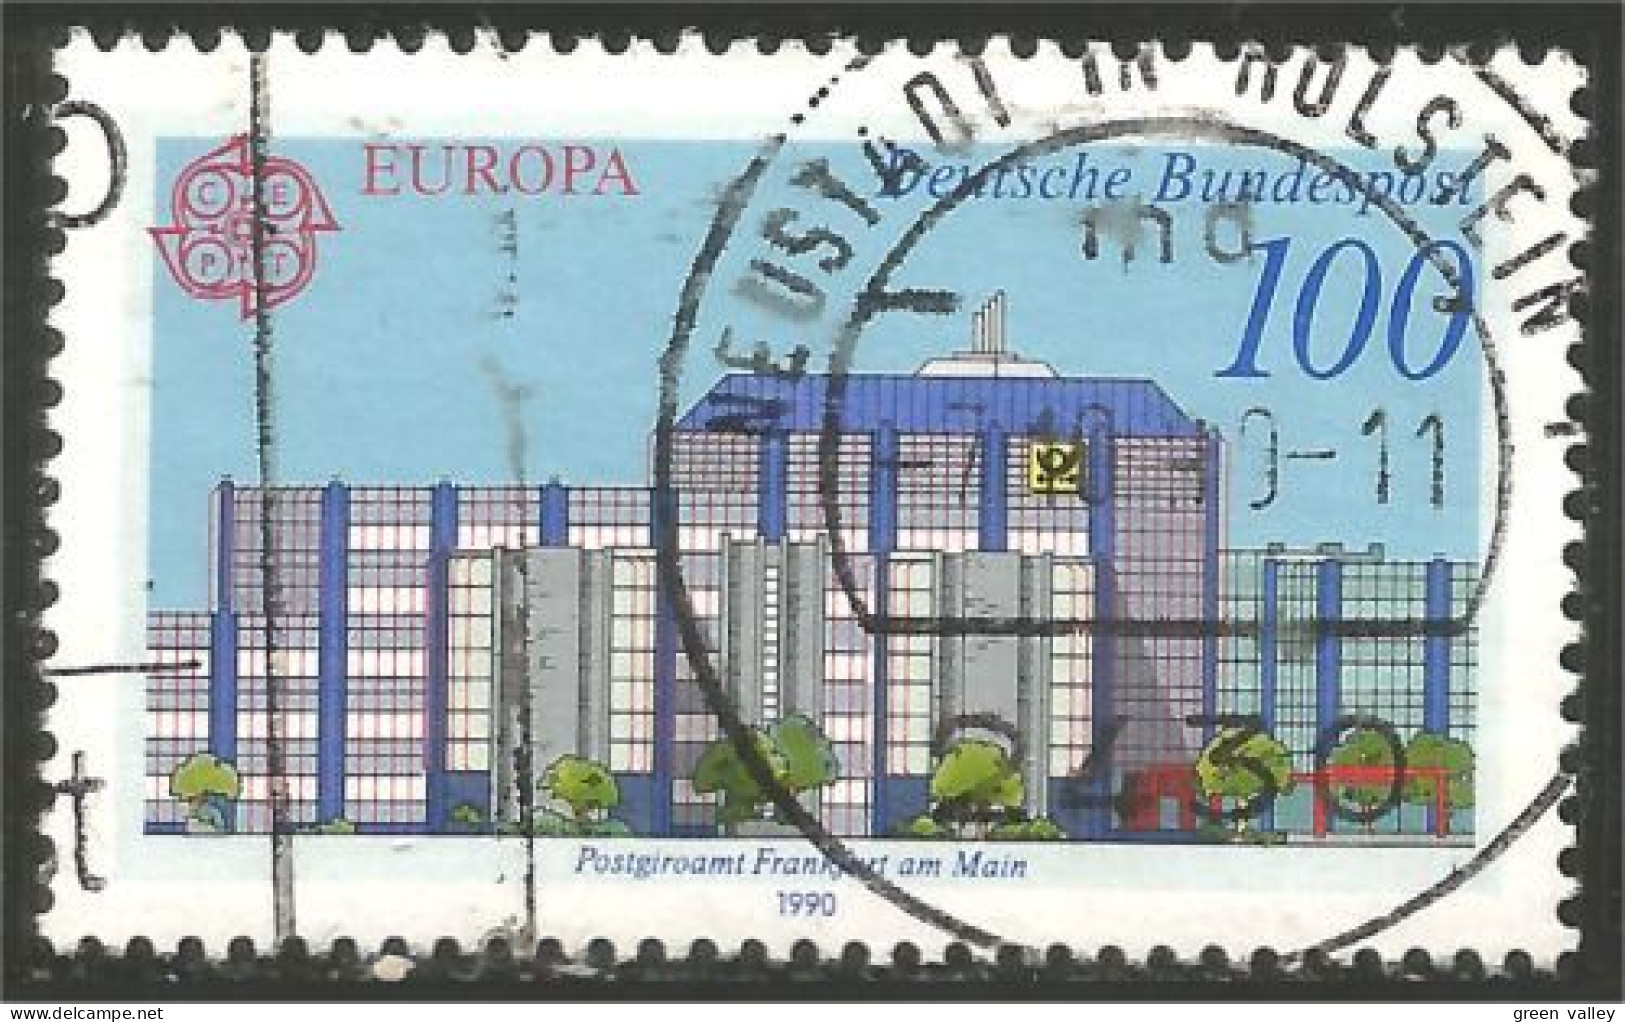 EU90-15a EUROPA-CEPT 1990 Allemagne NEUSTADT IN HOLSTEIN Bureaux Postes Postal Houses - 1990